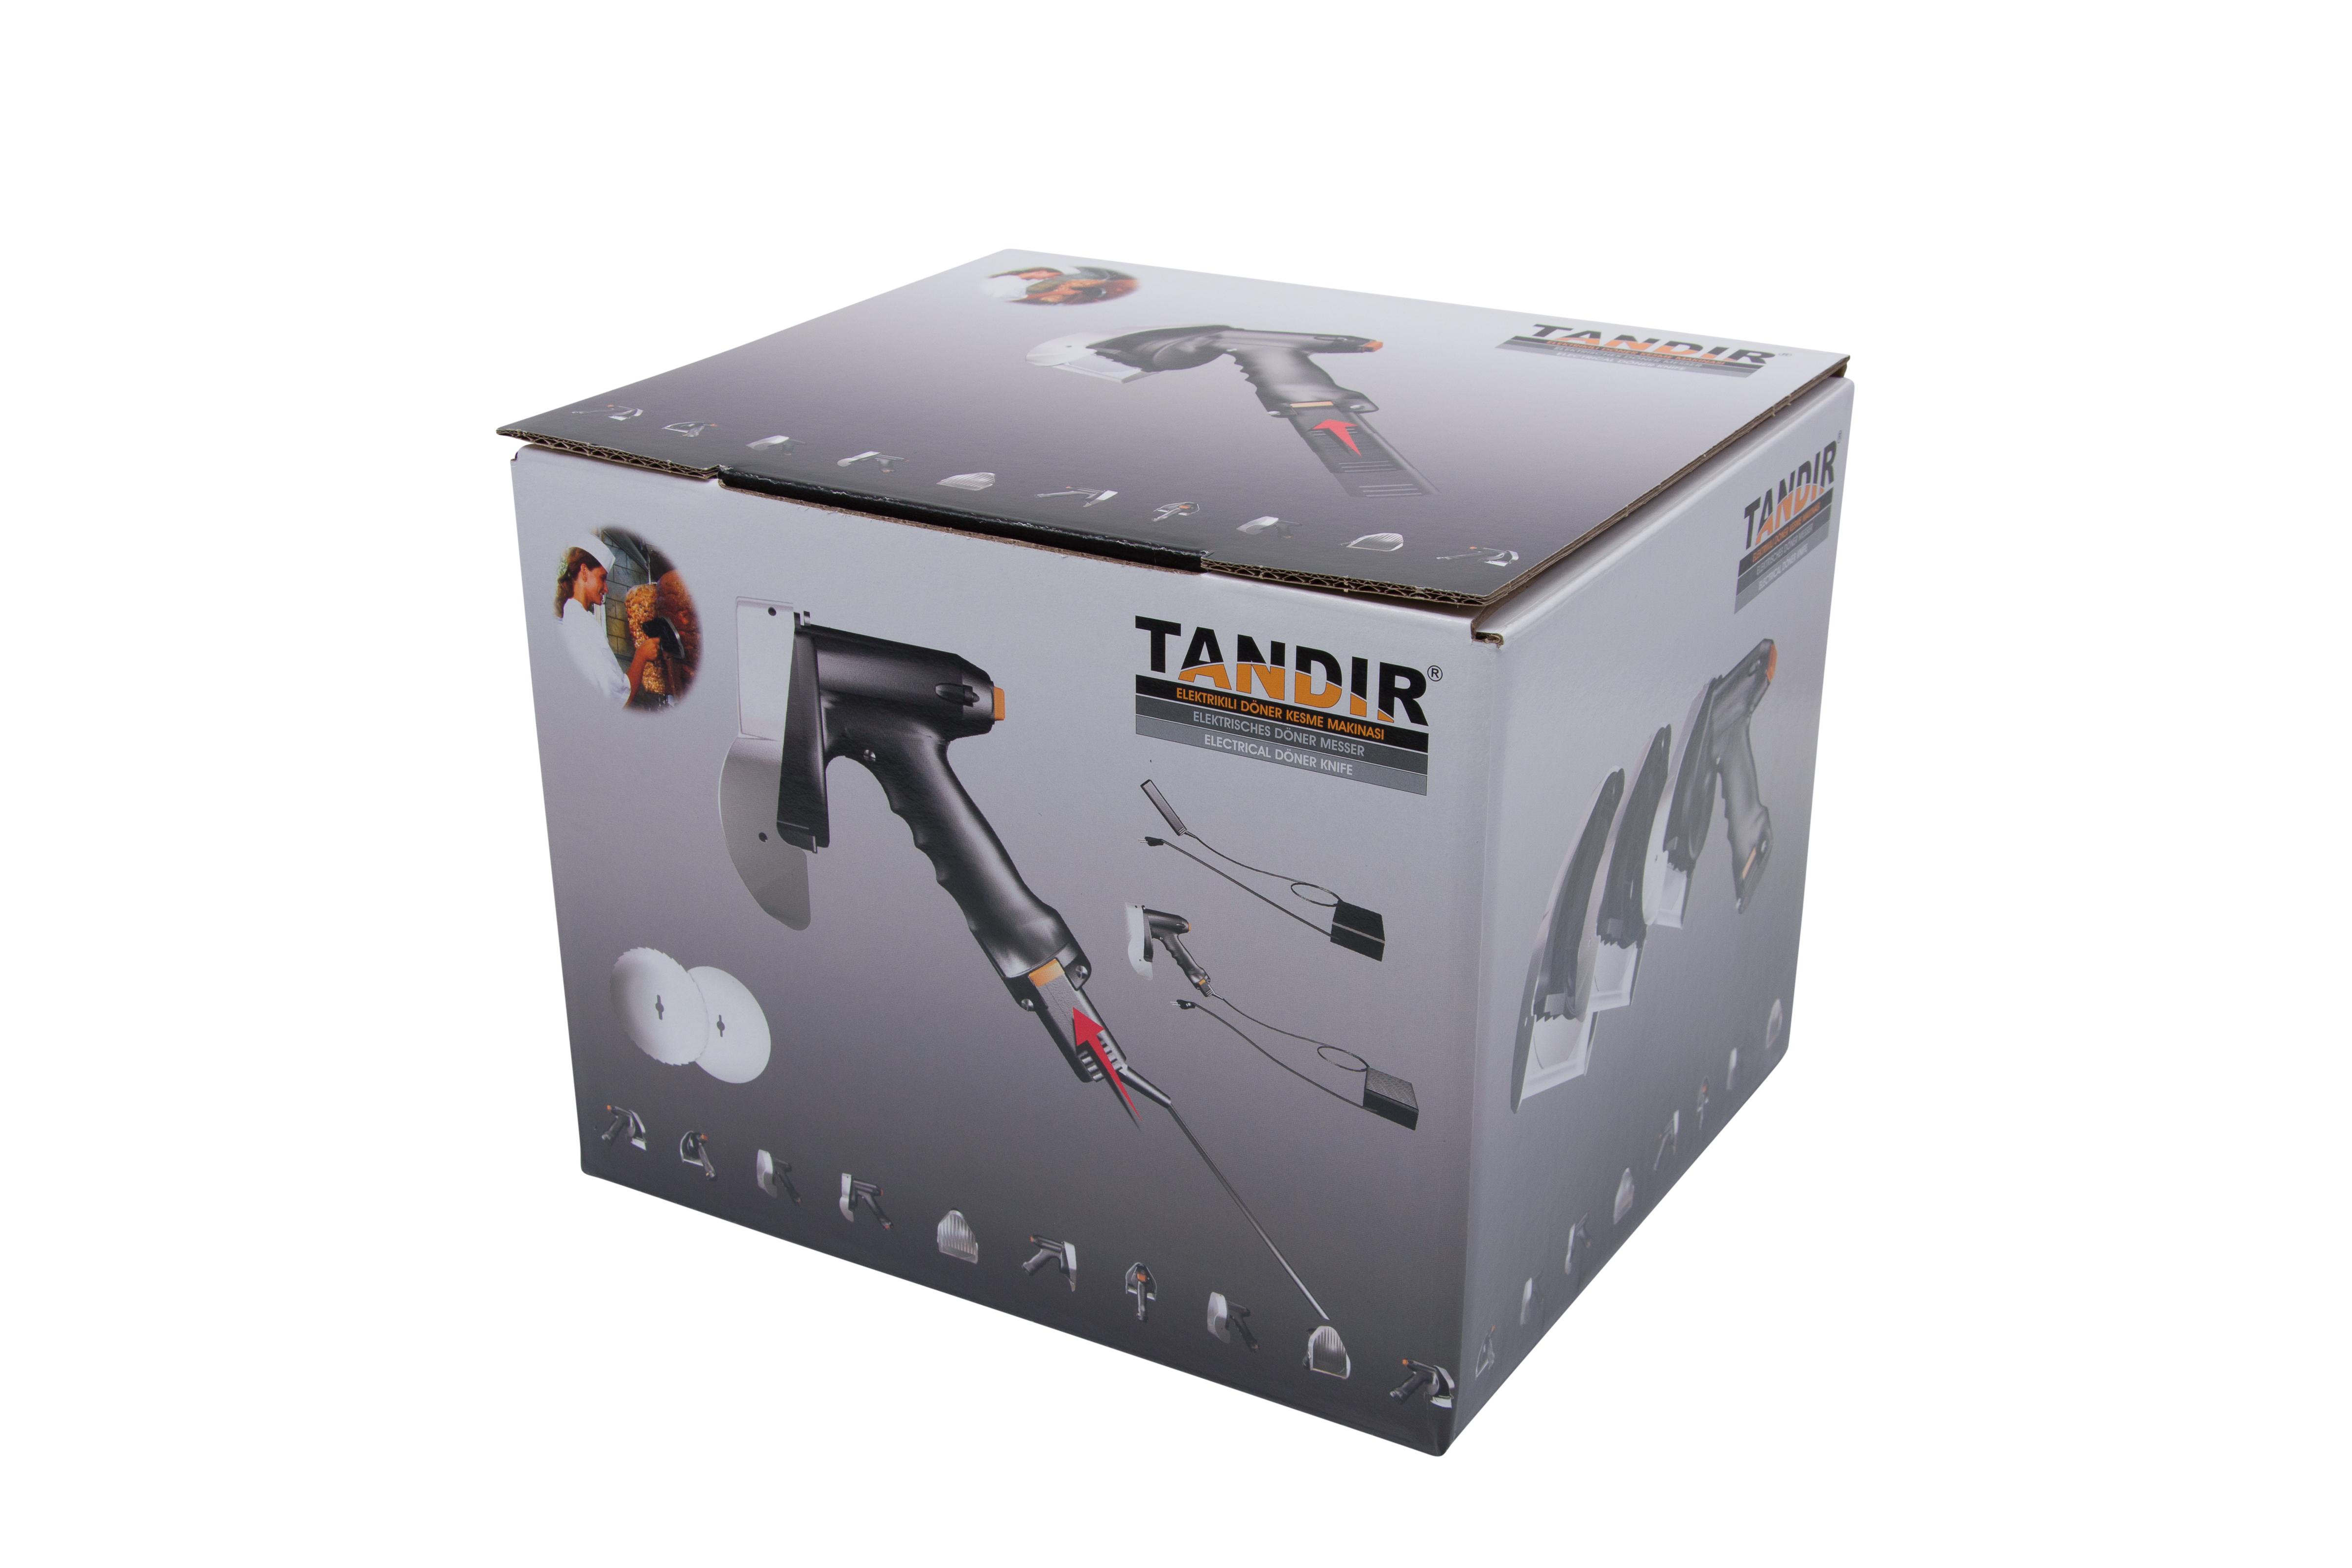 Tandir-Knife II 100 with transformer